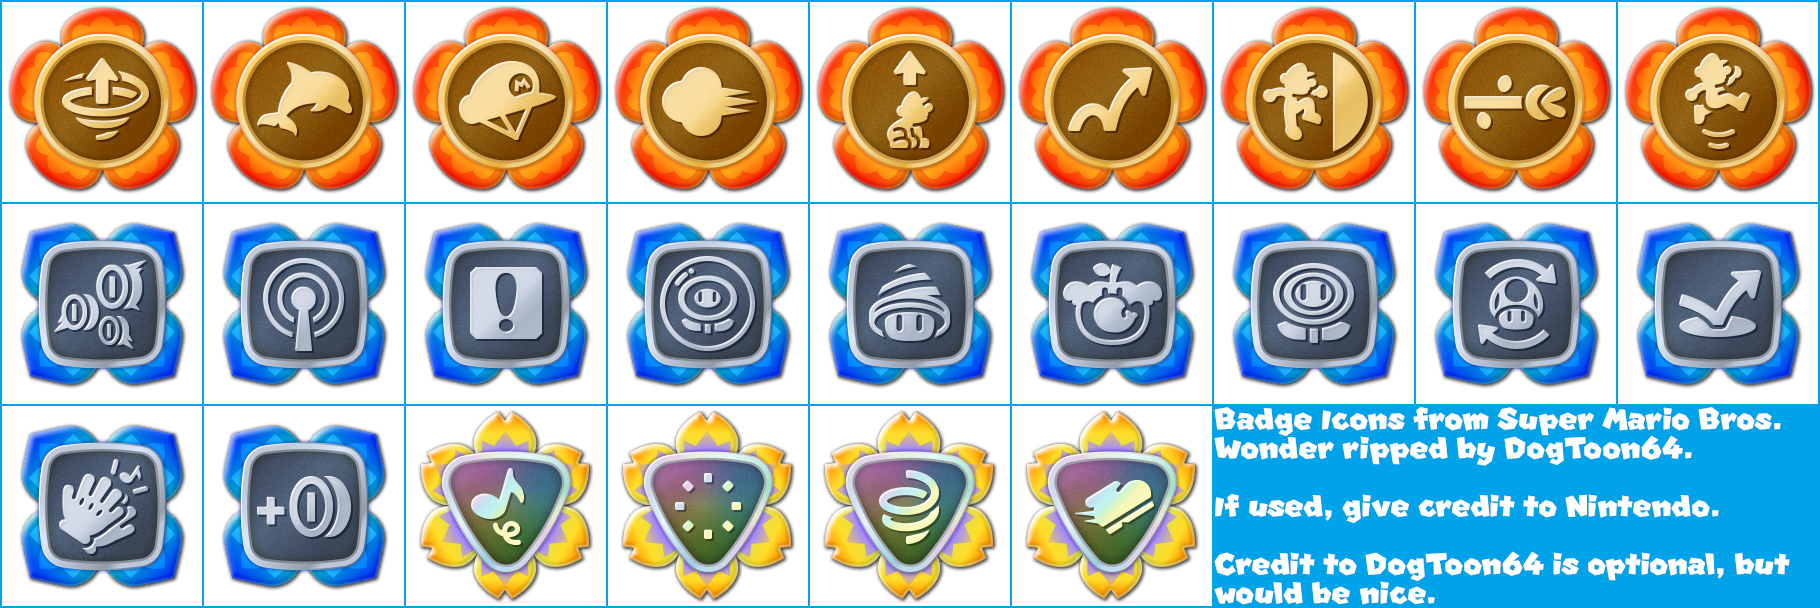 Badge Icons